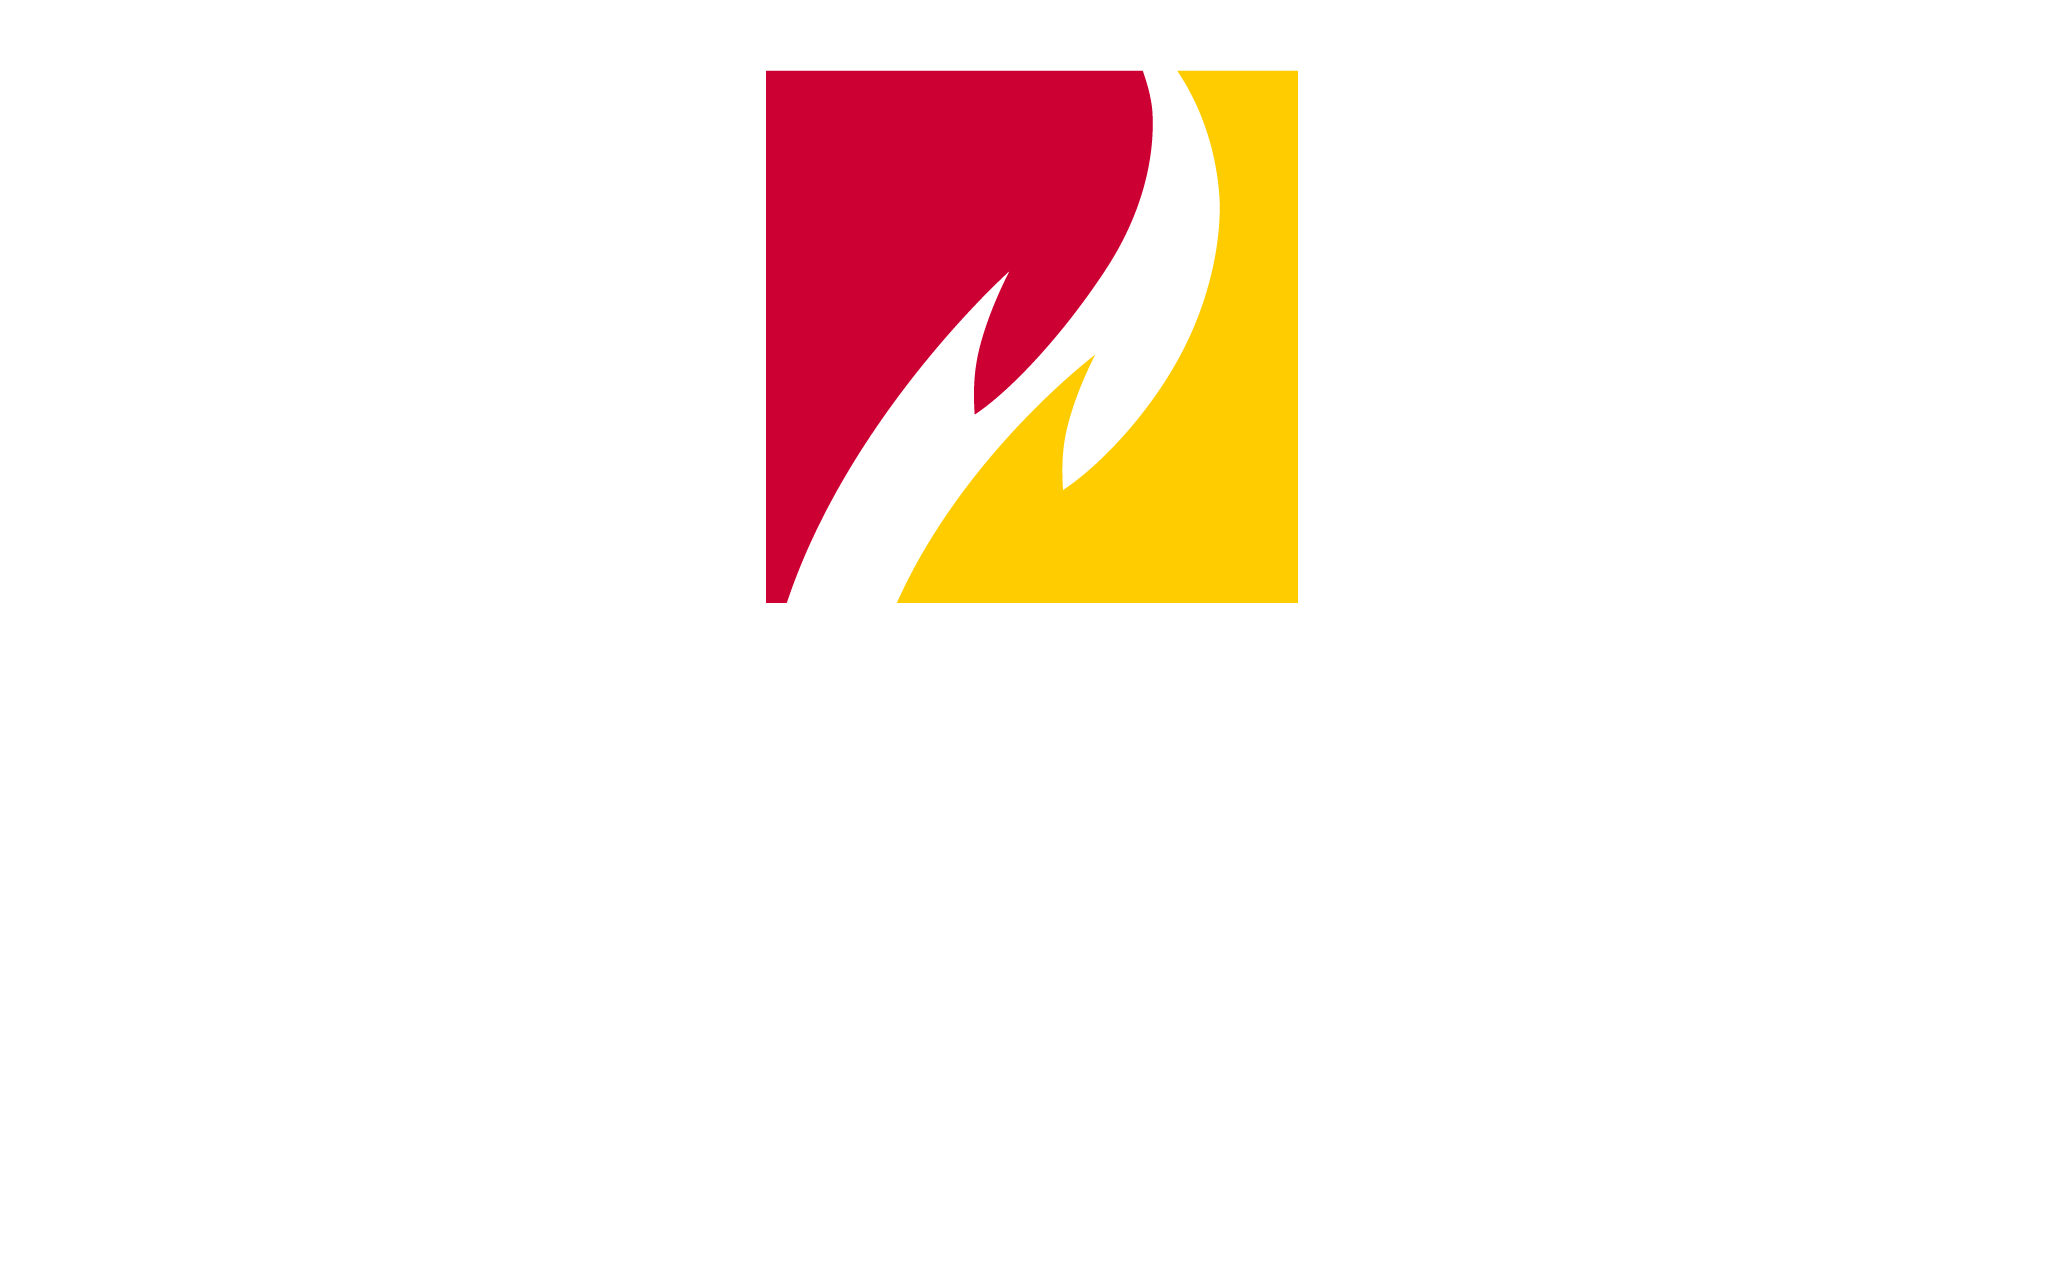 White Center Logo - Logos - Ferris State University